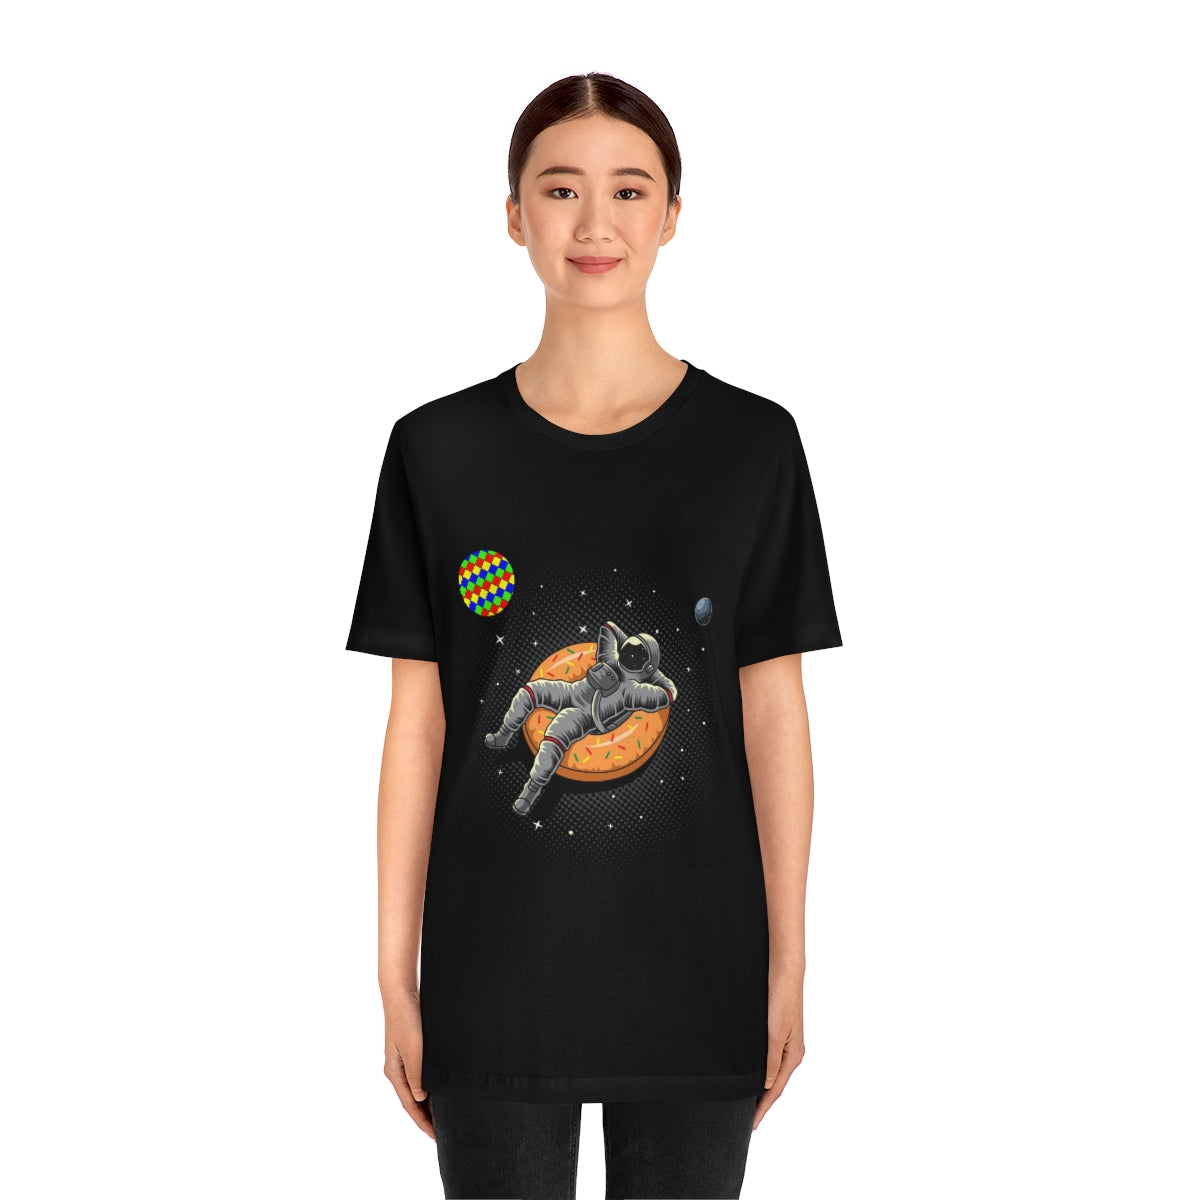 Unisex Jersey Short Sleeve Tee "Astronaut and CubeArea planet"